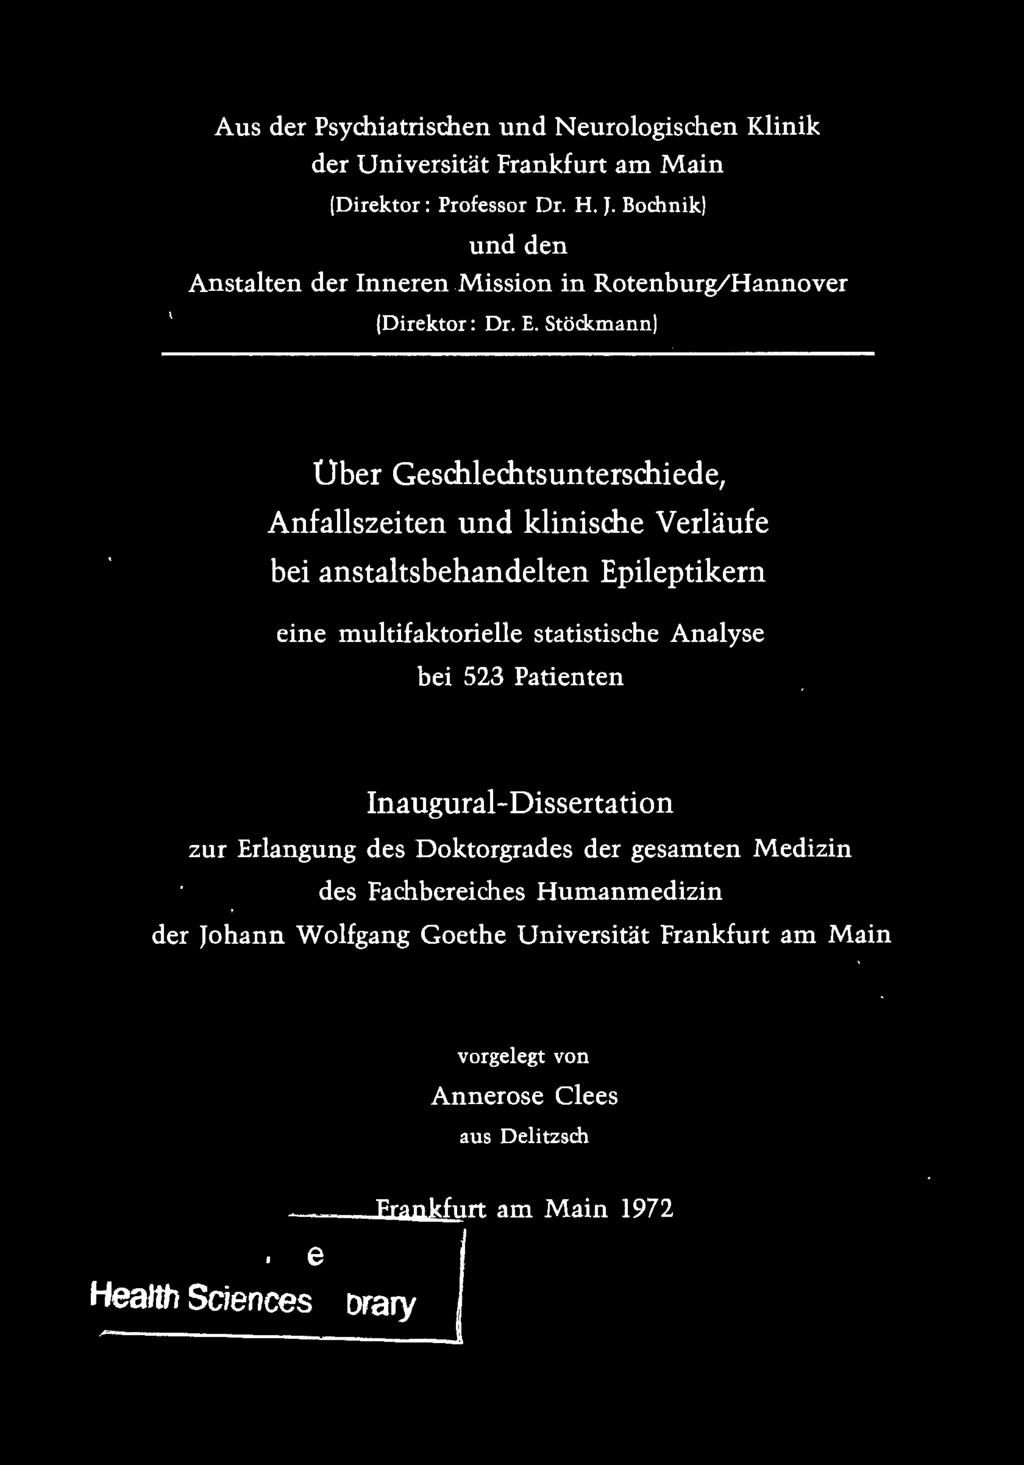 Erlangung des Doktorgrades gesamten Medizin des Fachbcreiches Humanmedizin Johann Wolfgang Goethe